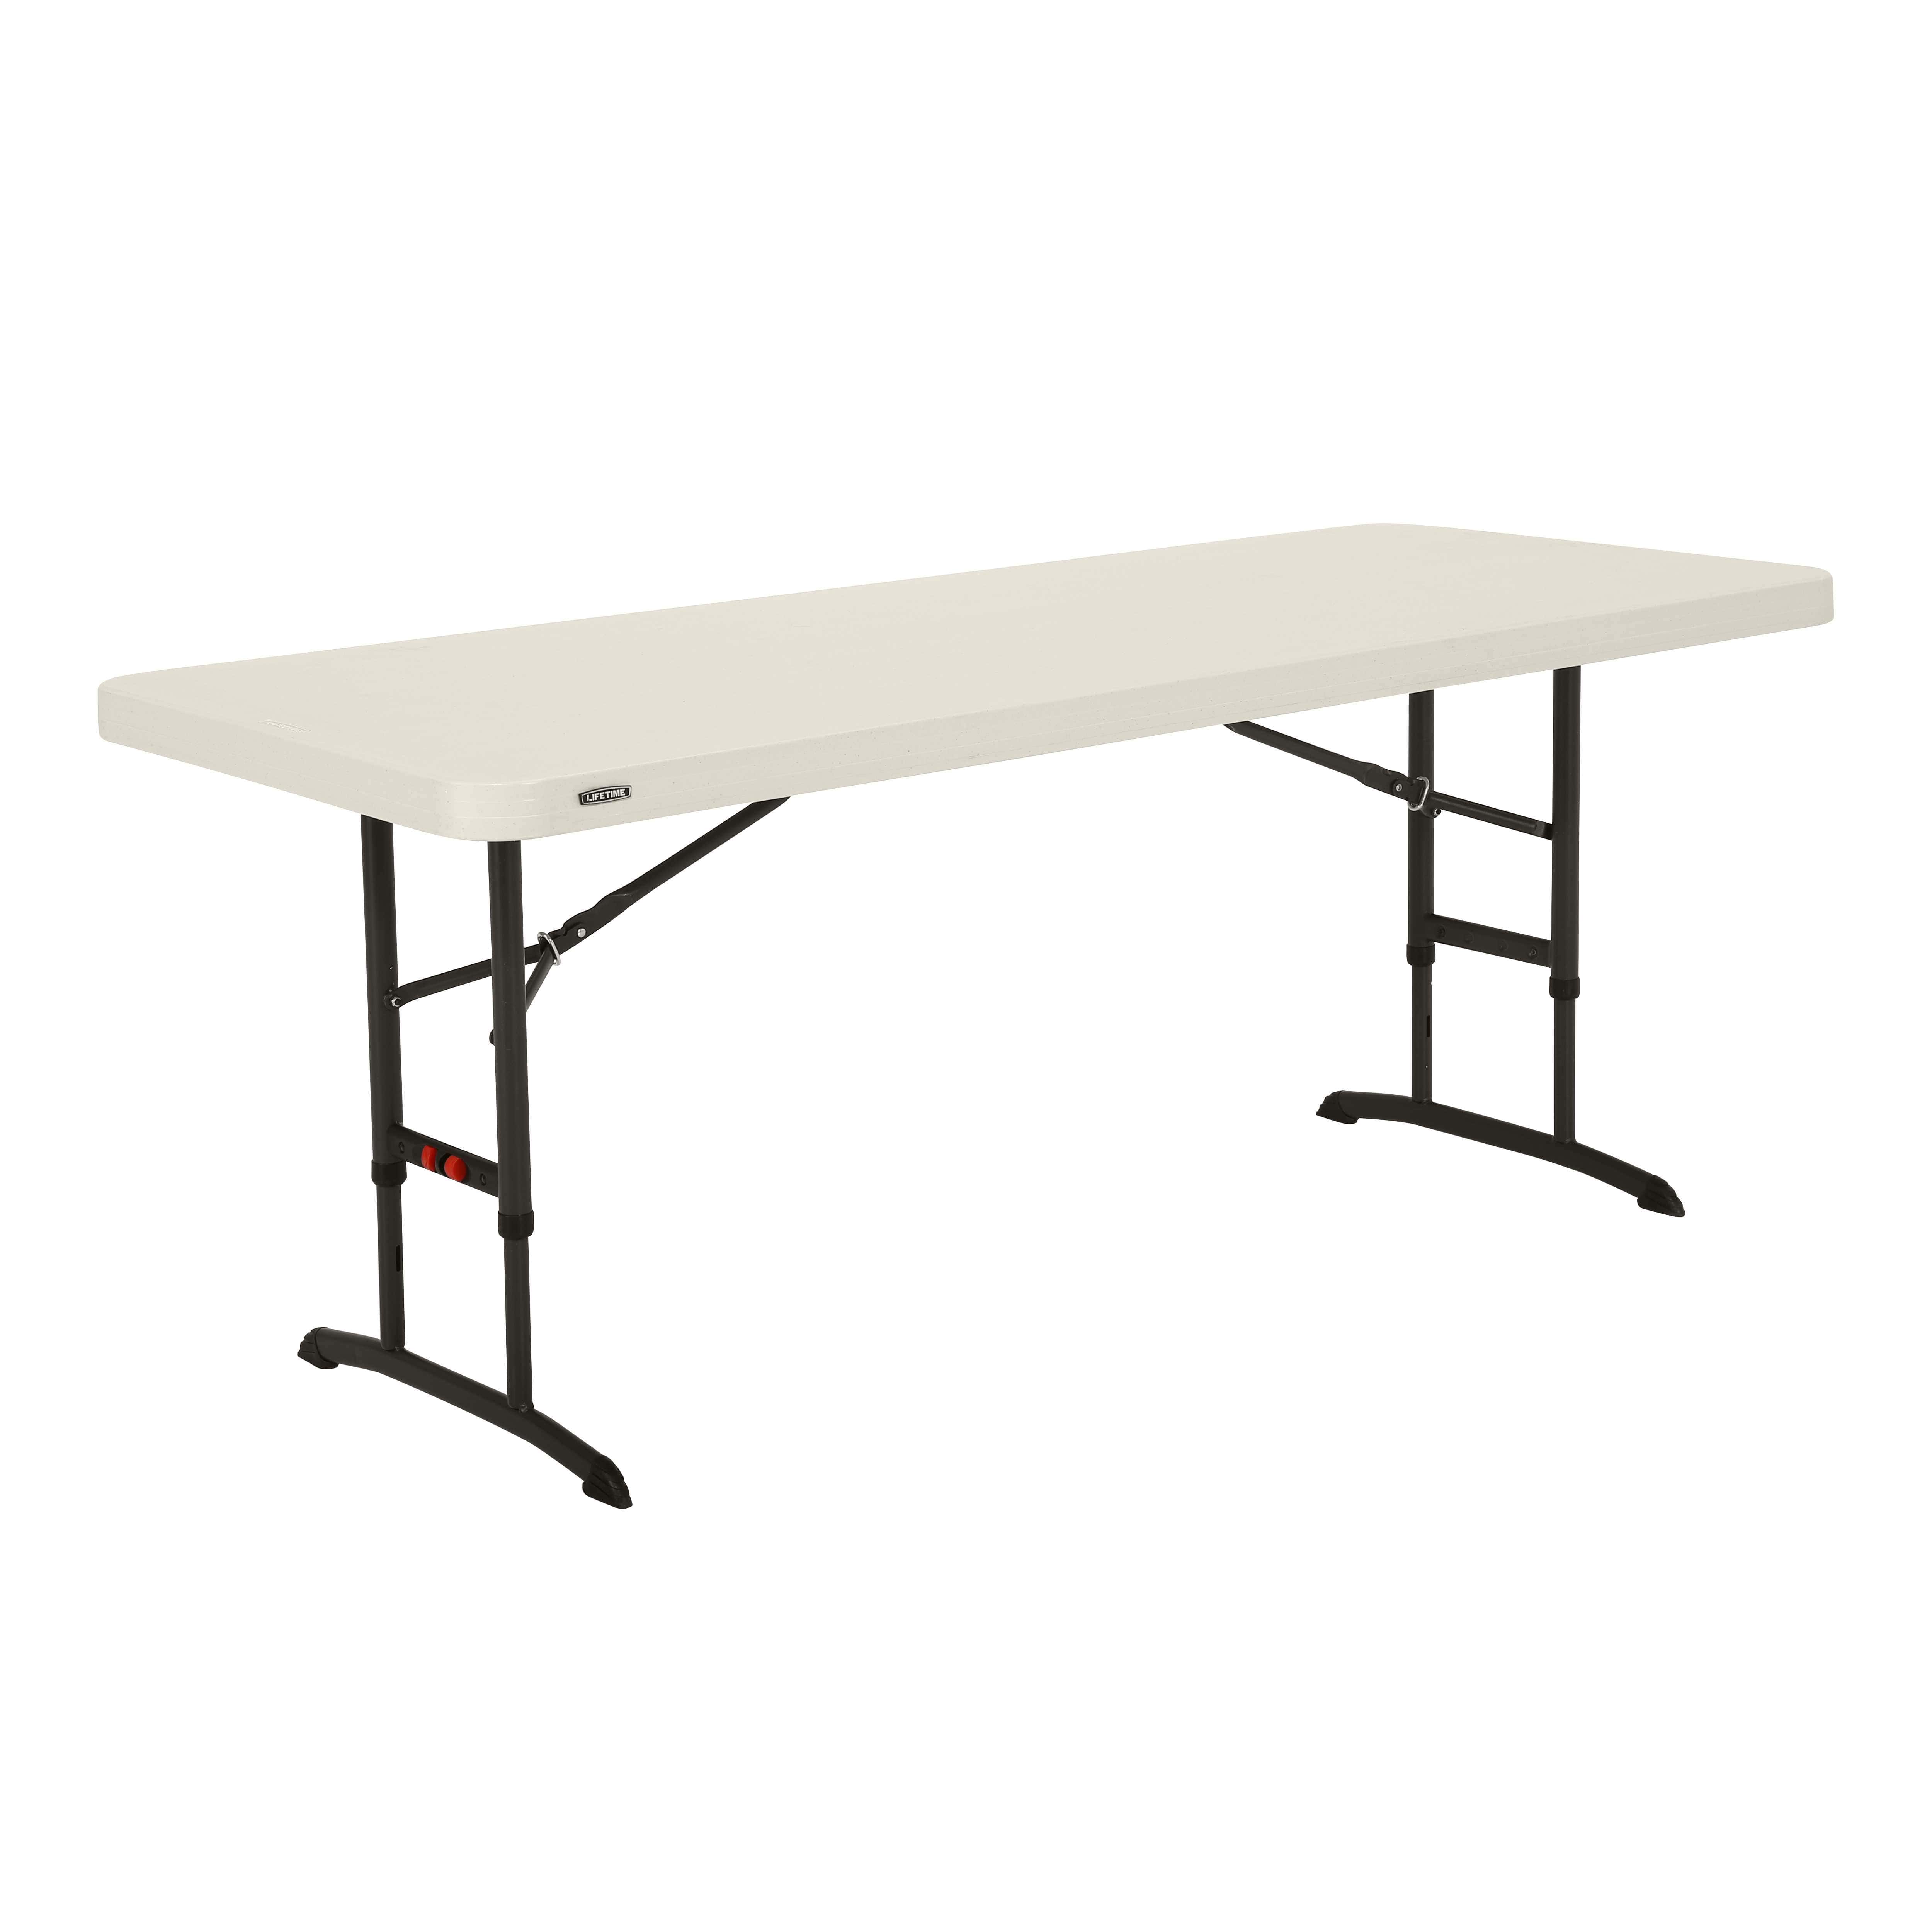 6ft adjustable table 